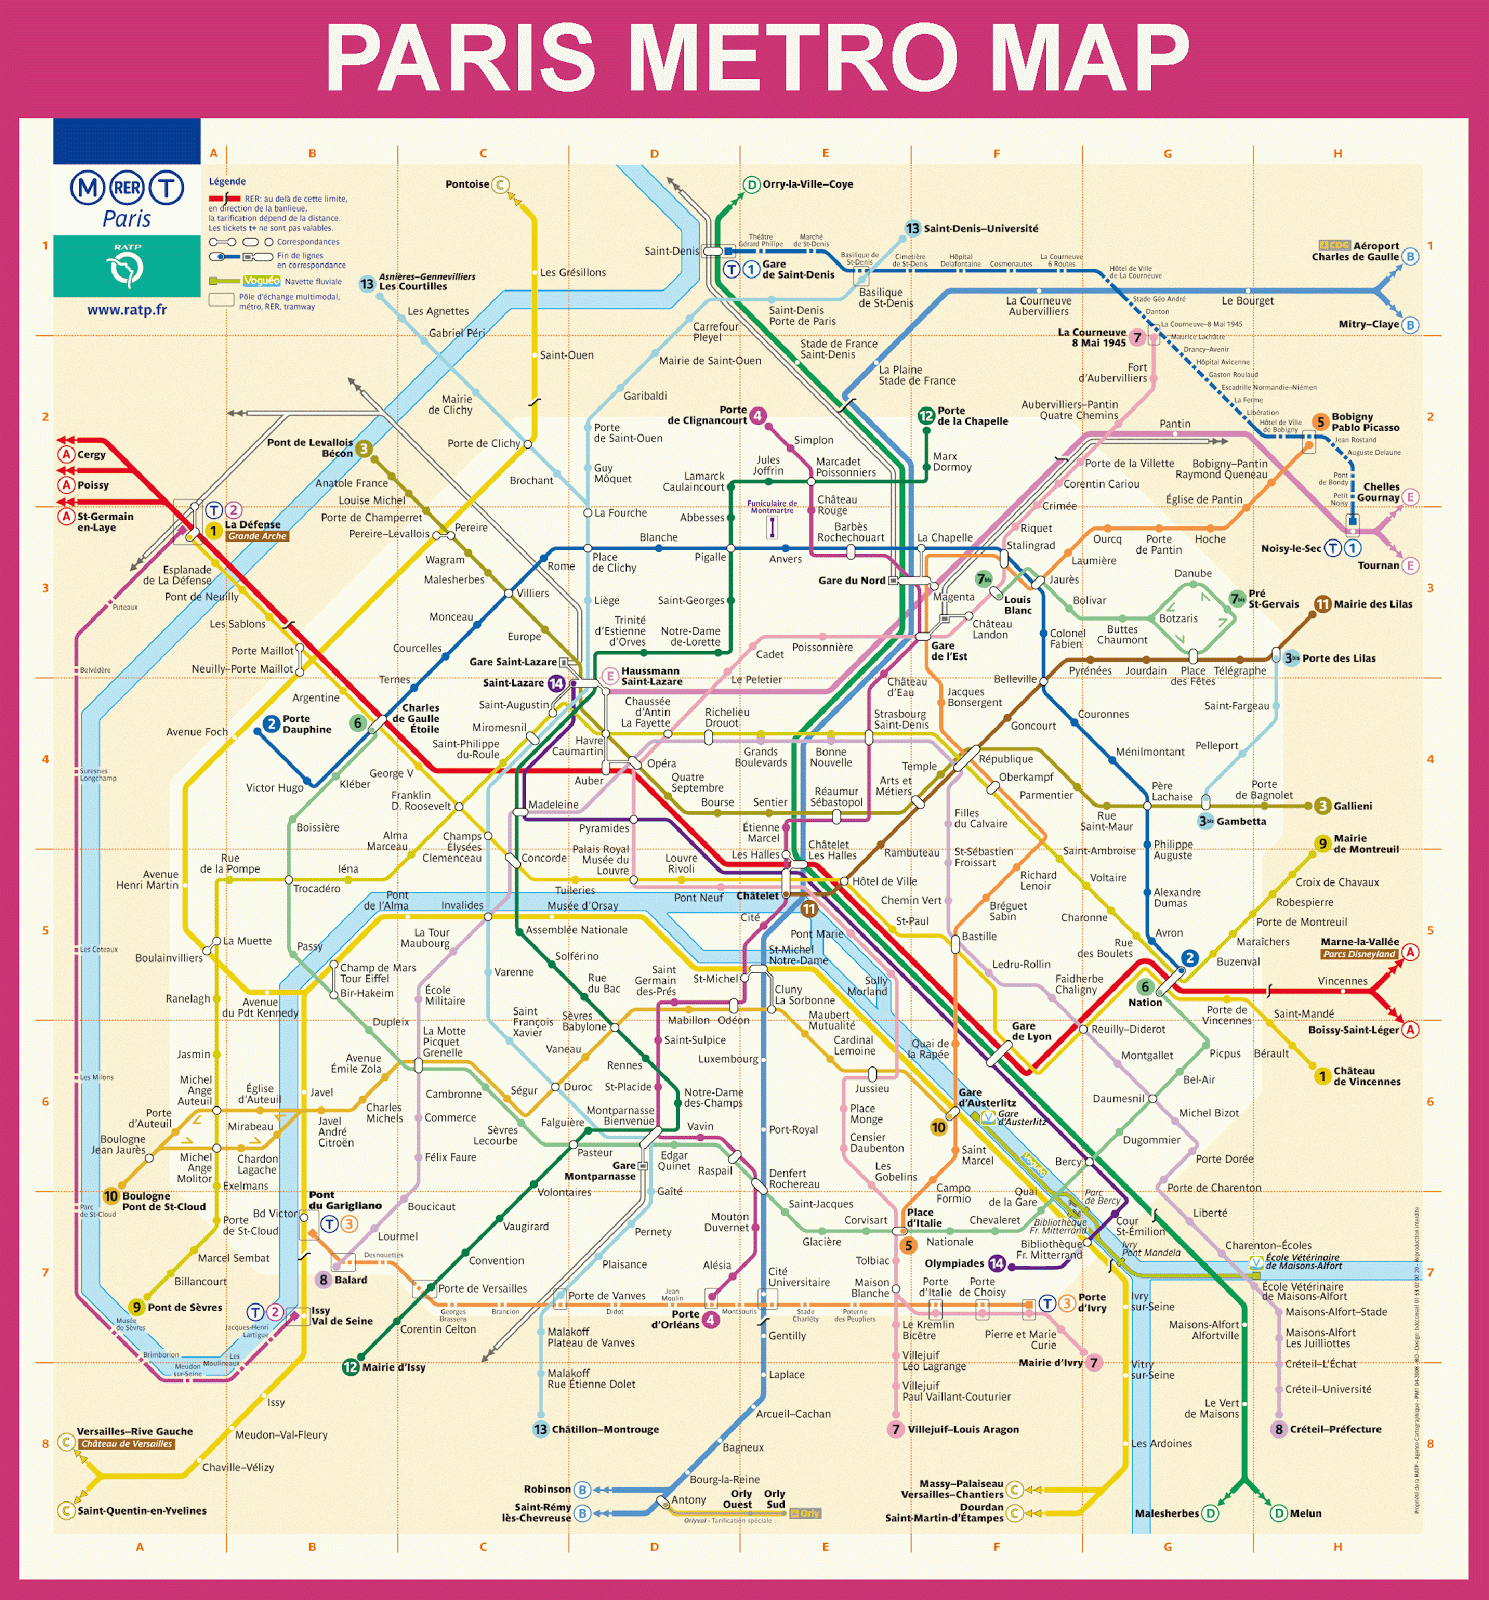 La vie à Paris: Metro